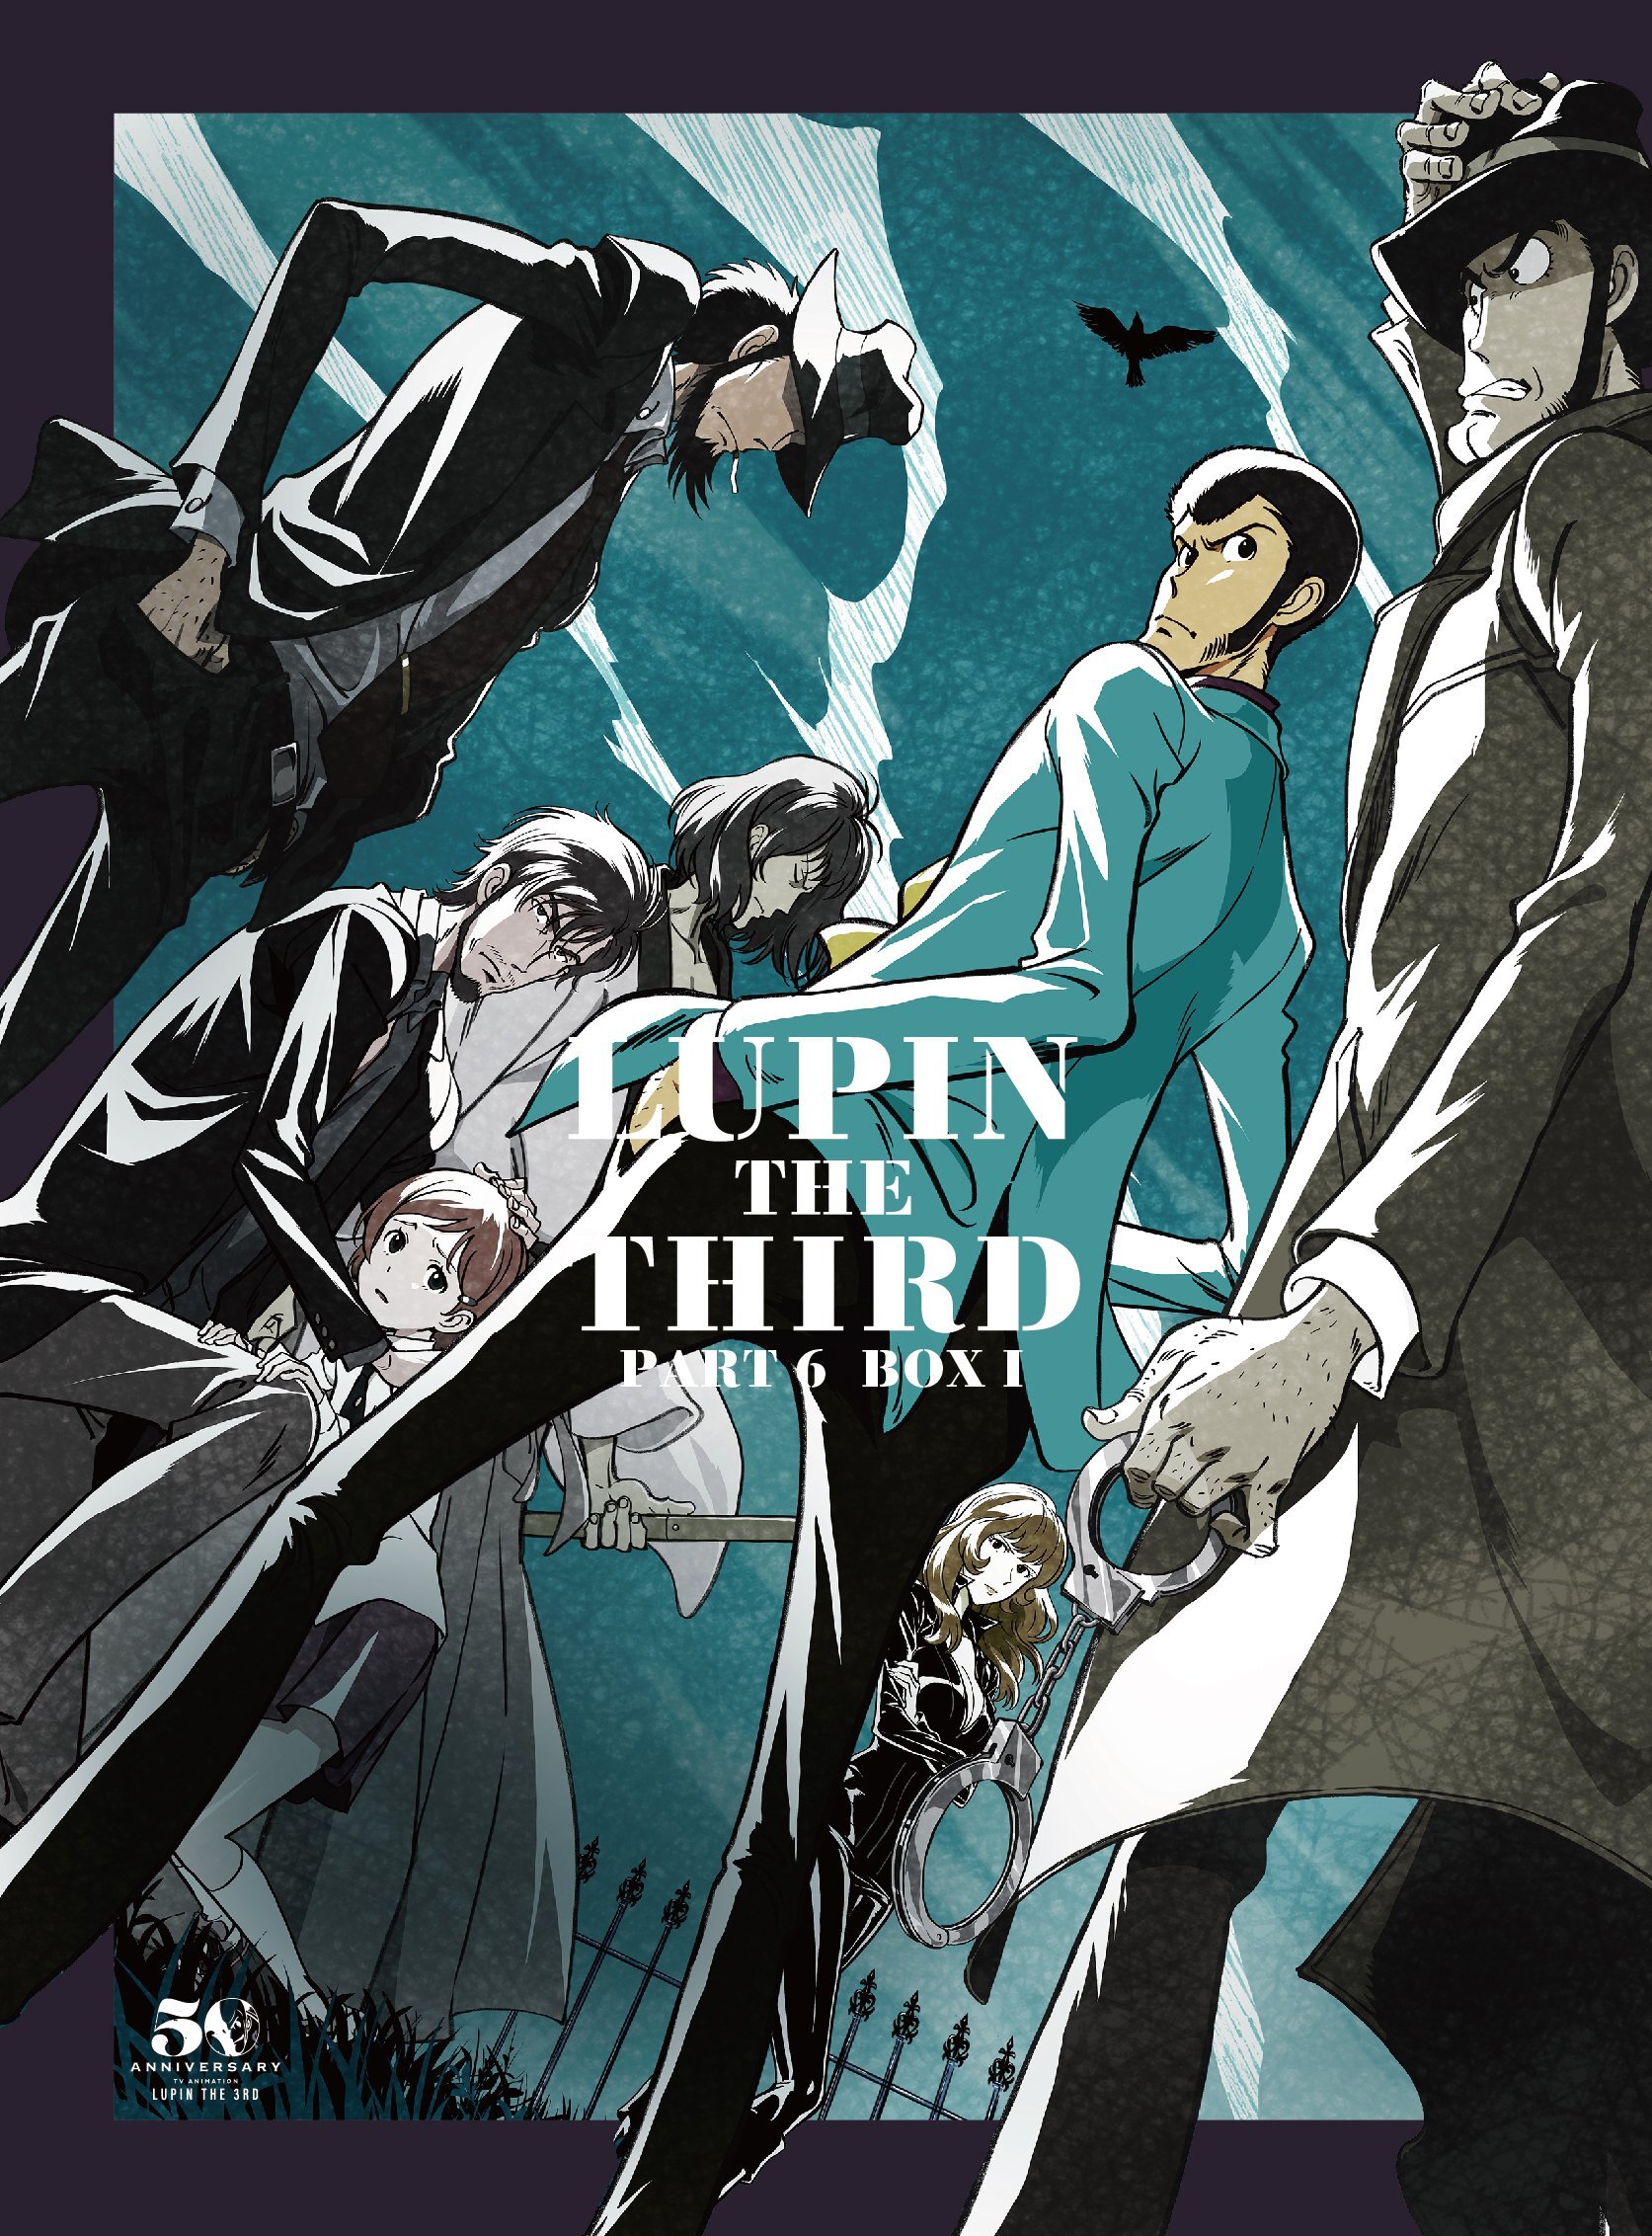 Lupin Zero Todos os Episódios Online » Anime TV Online